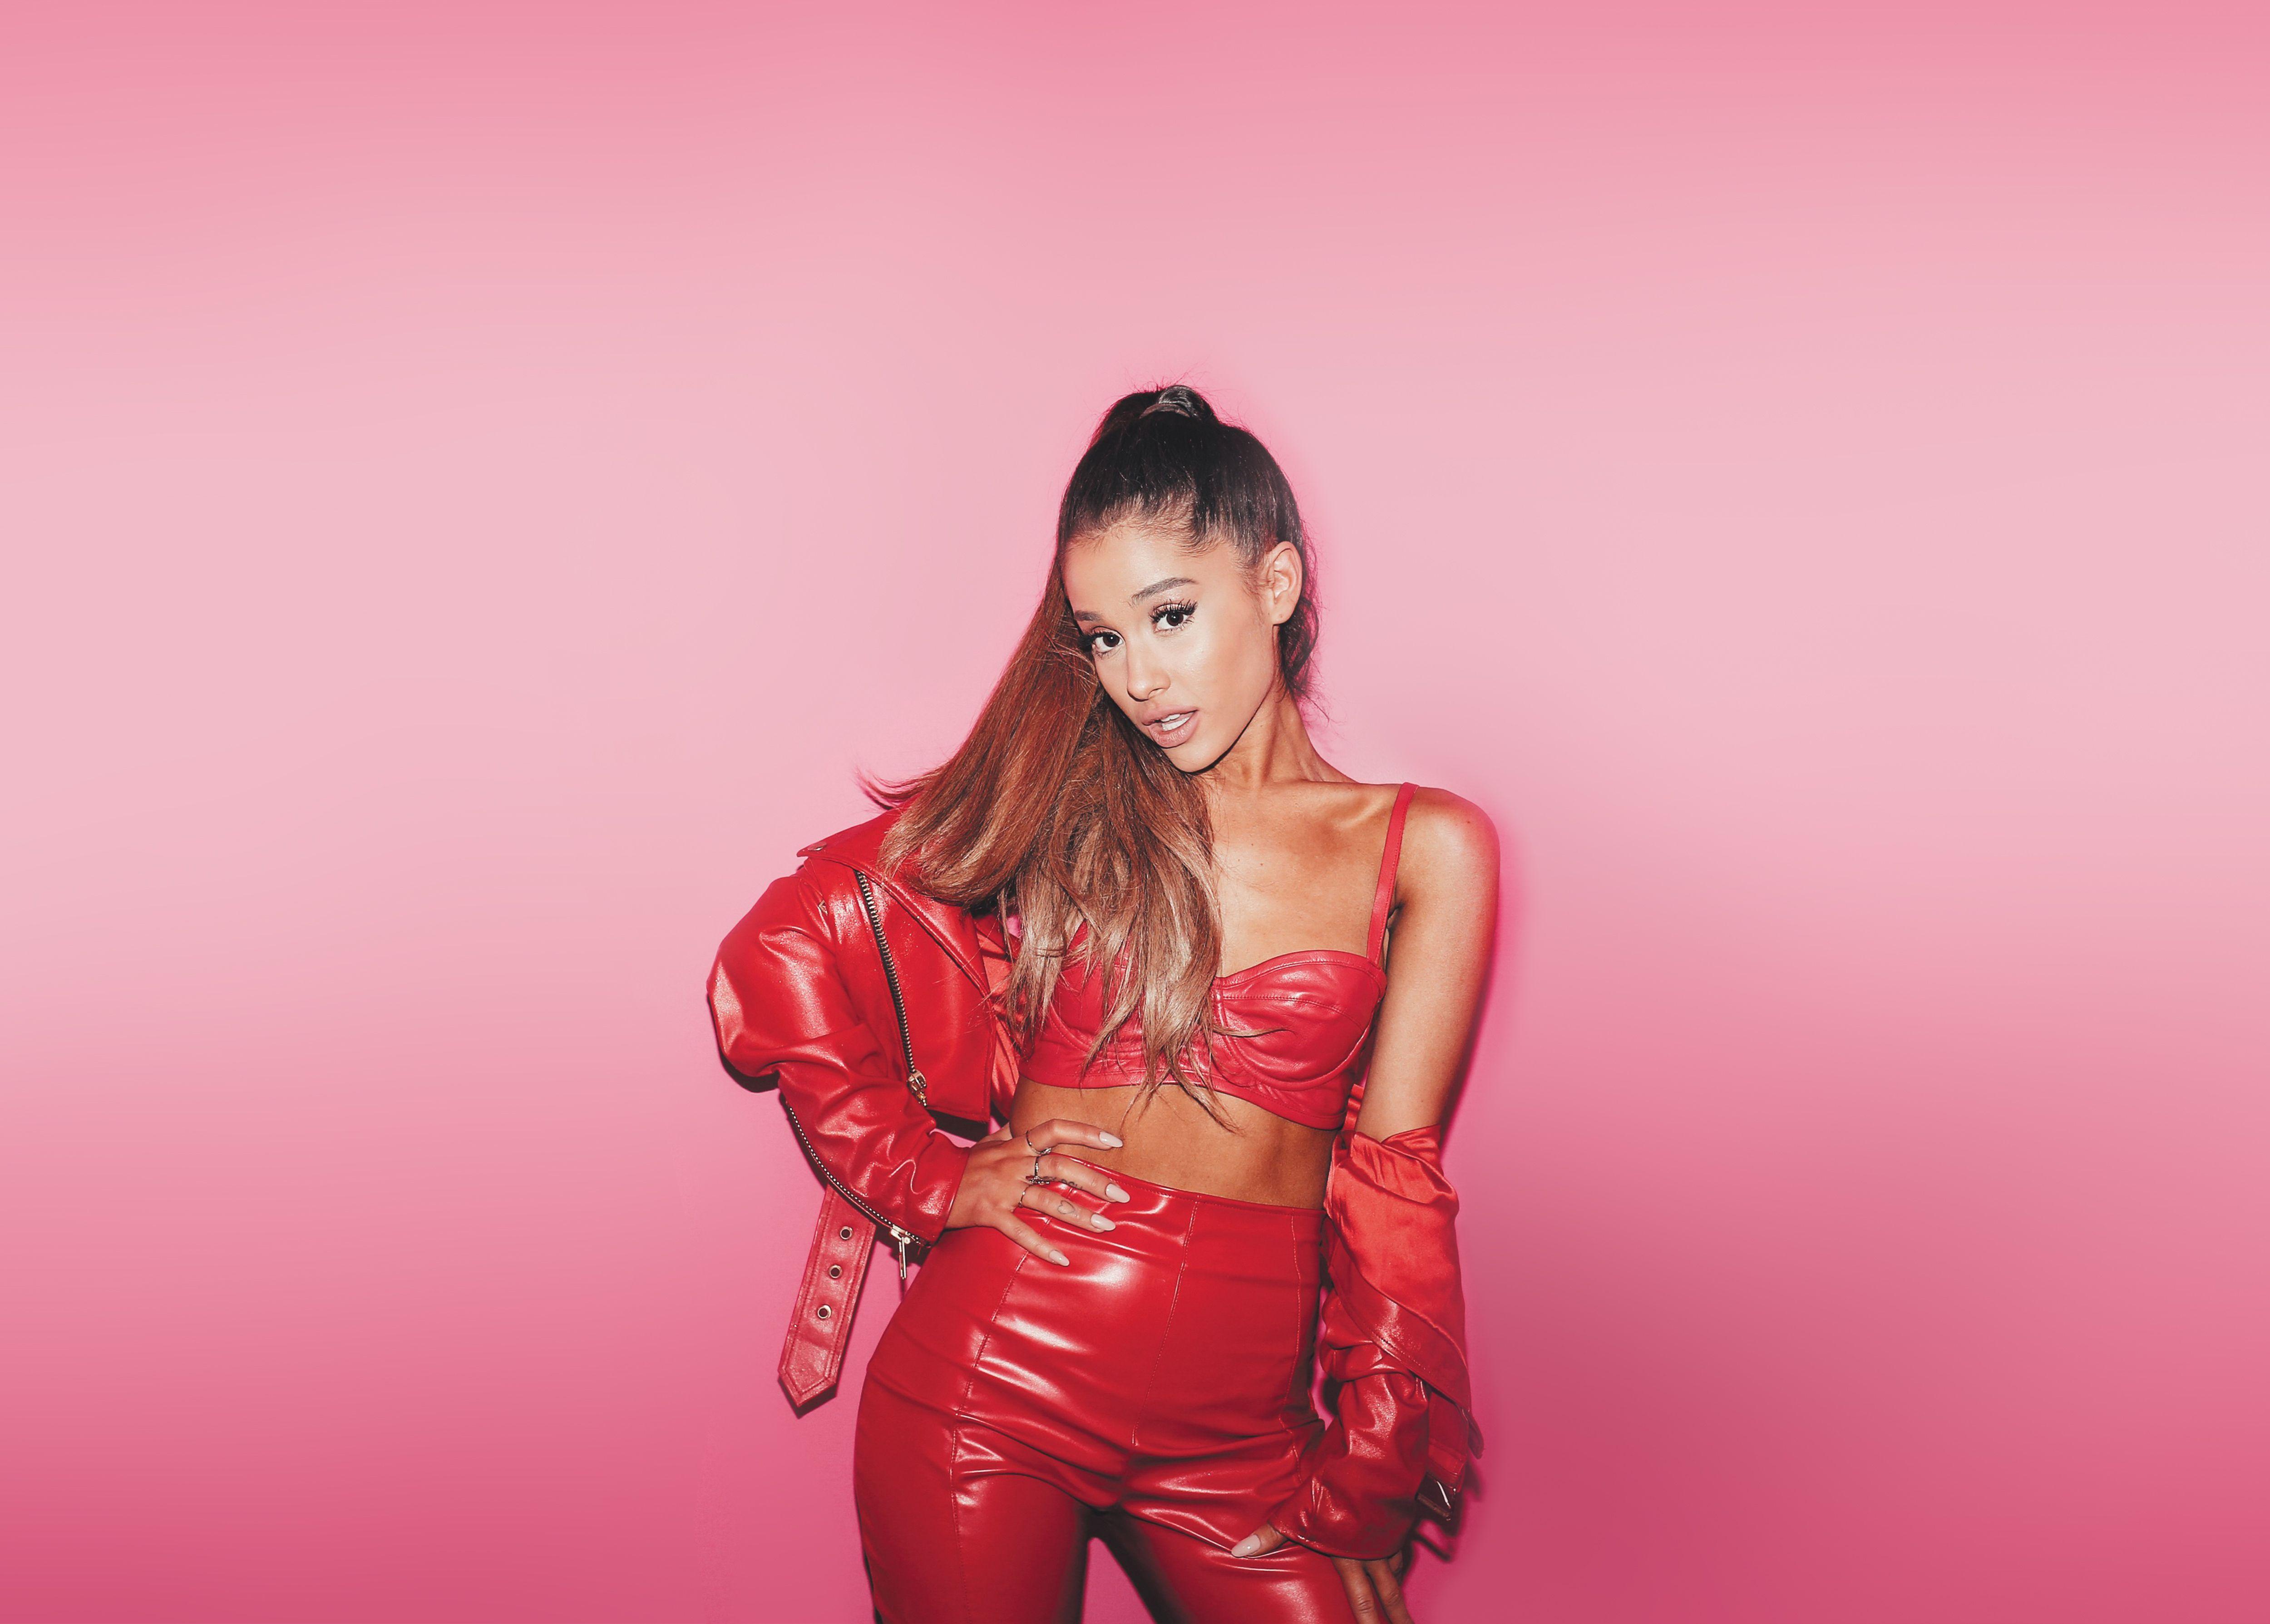 Ariana Grande 2017 Wallpapers Top Free Ariana Grande 2017 Images, Photos, Reviews